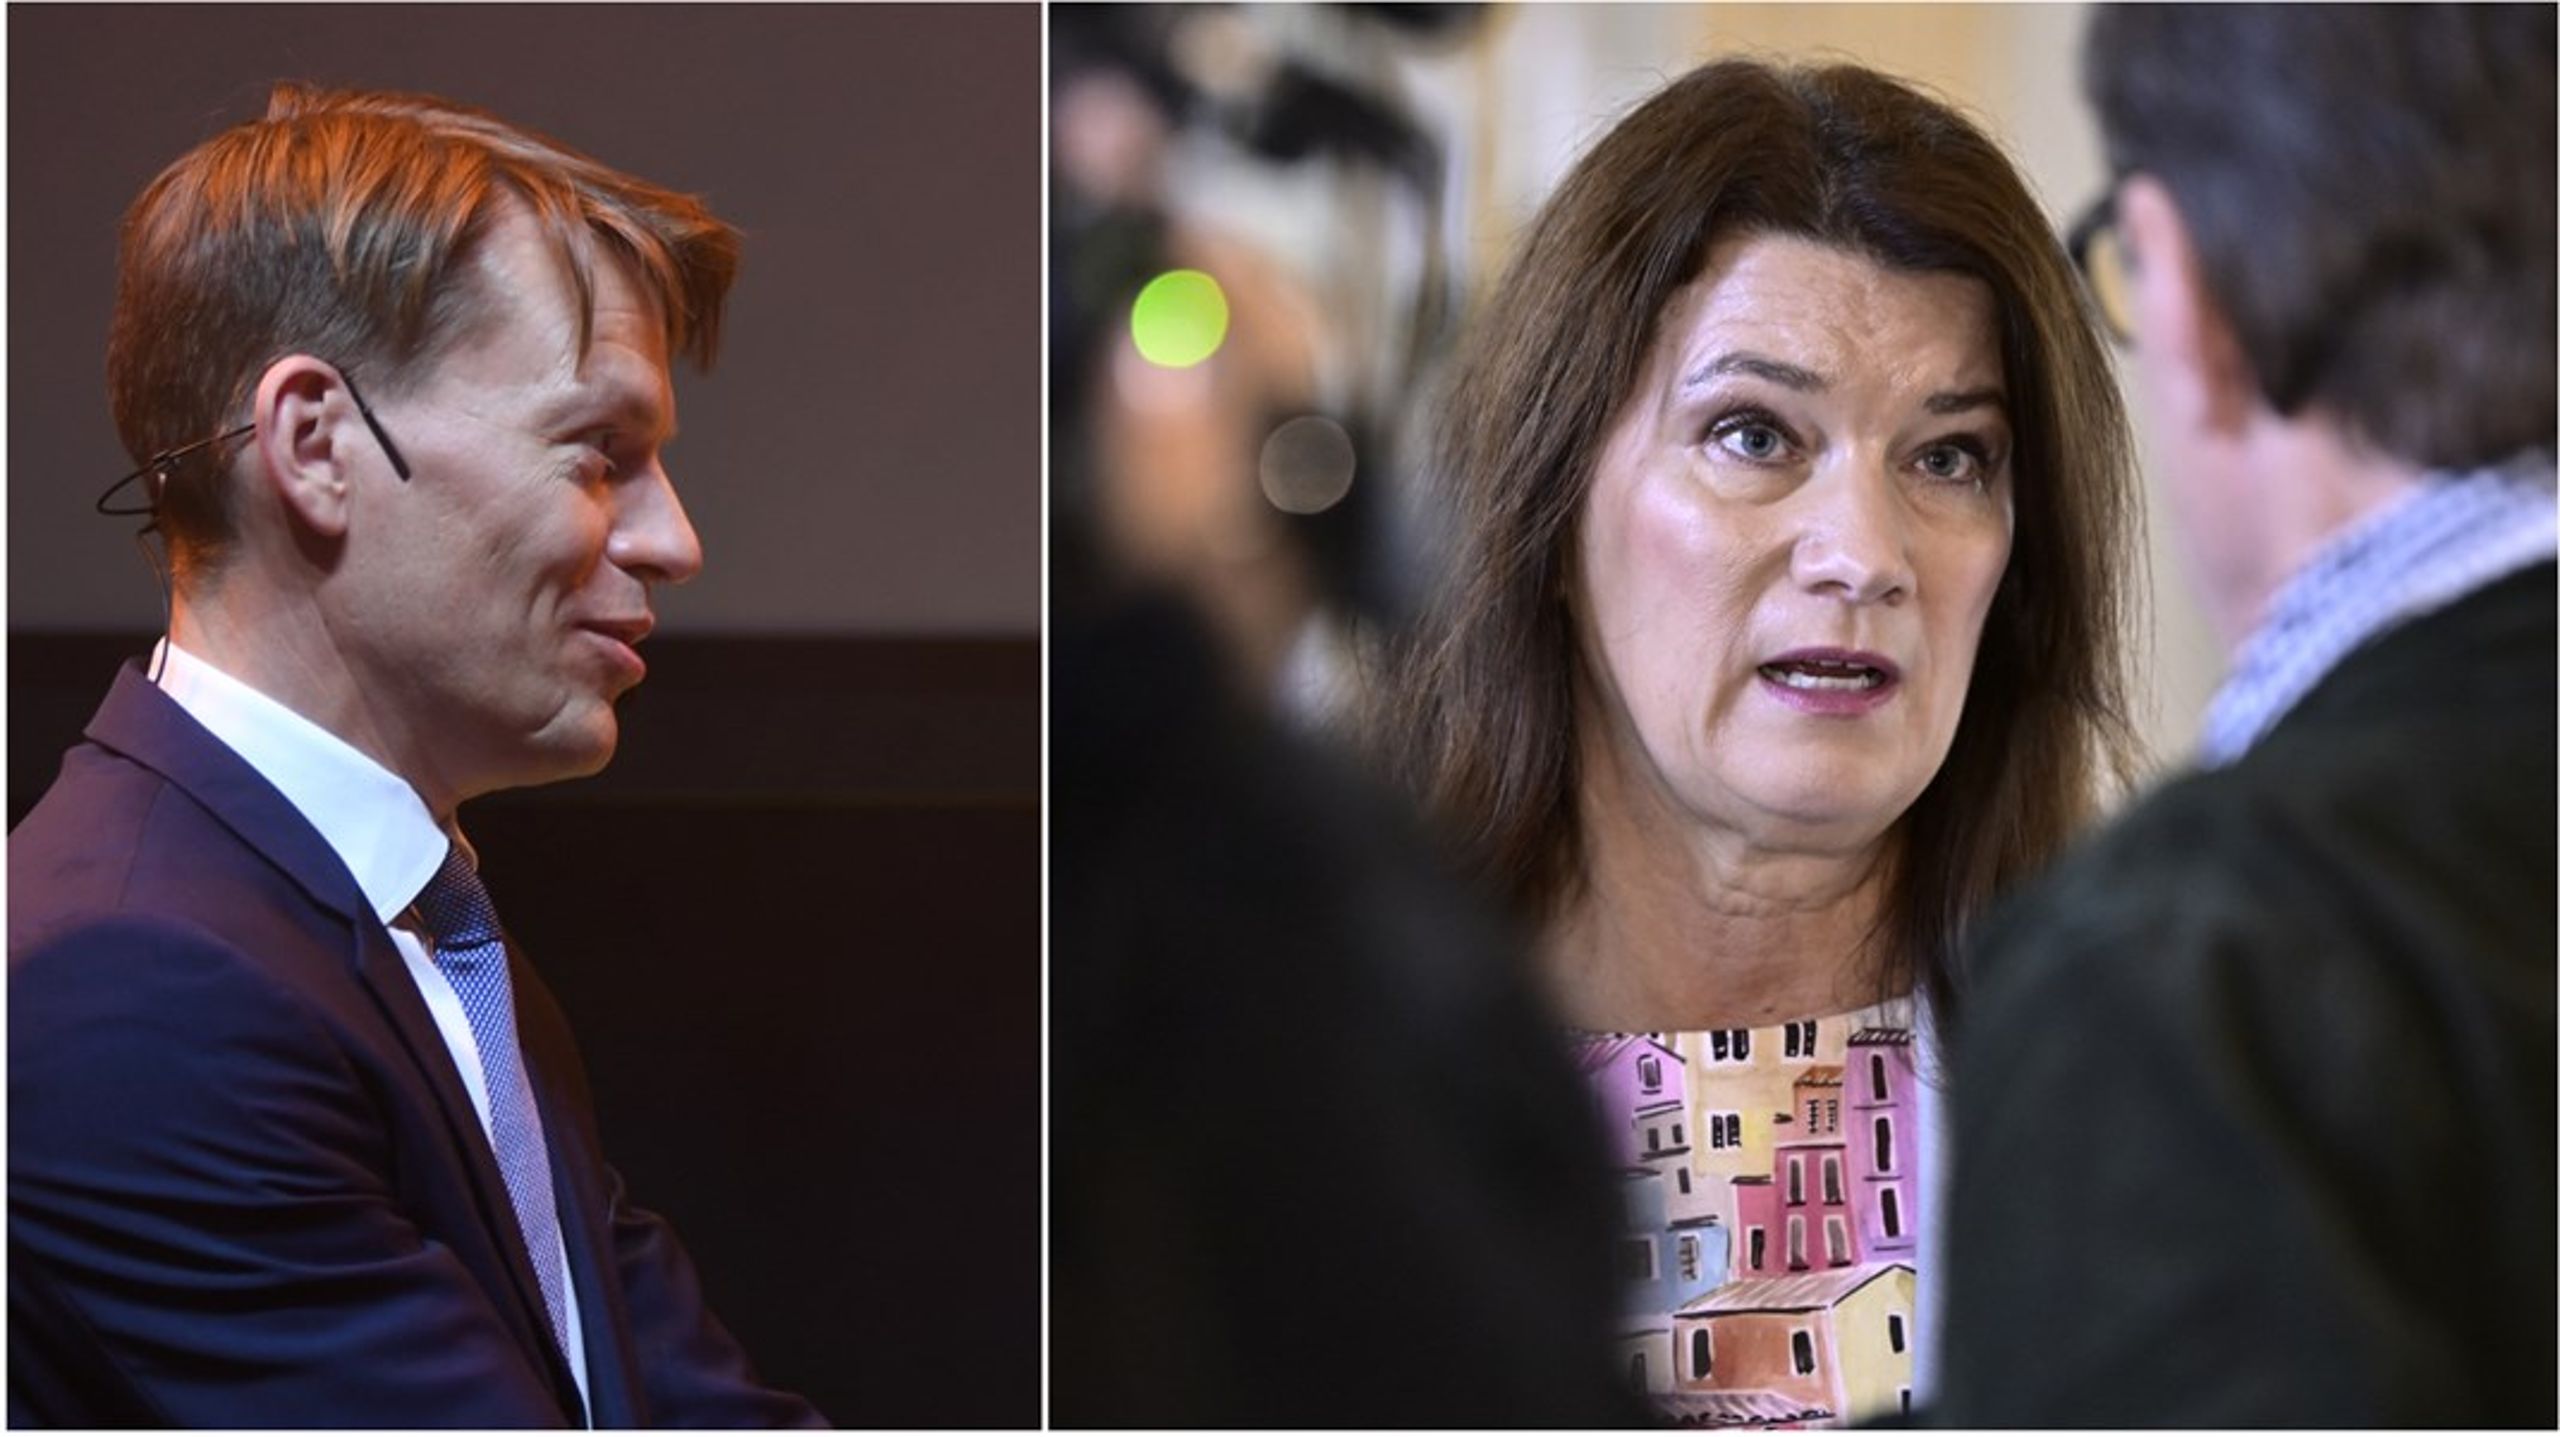 Karensnämnden ger PM Nilsson tummen upp men Ann Linde får restriktioner.